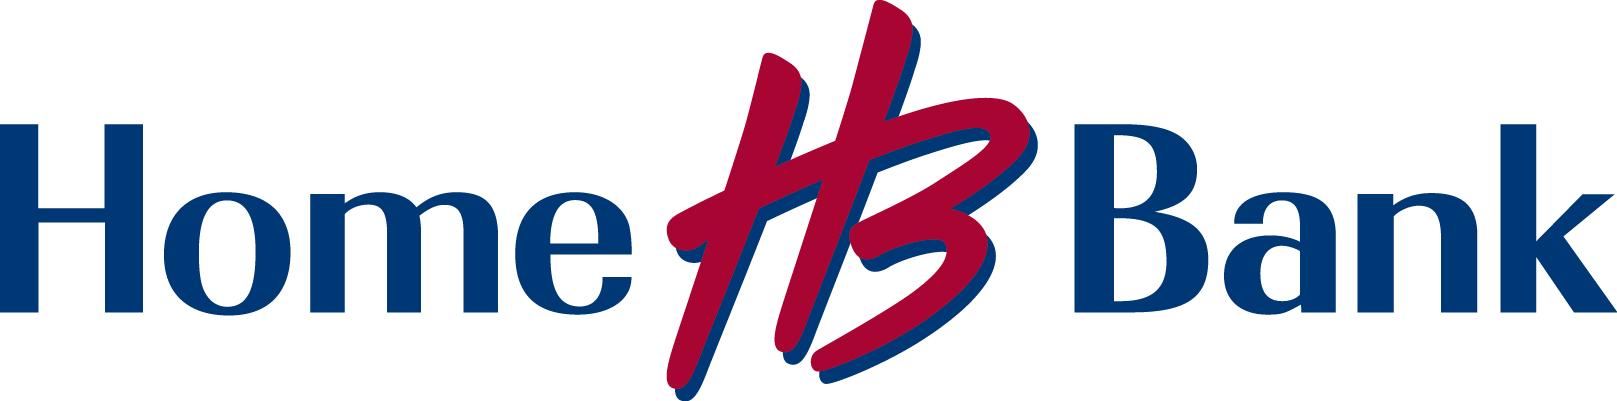 Home Bank Company Logo